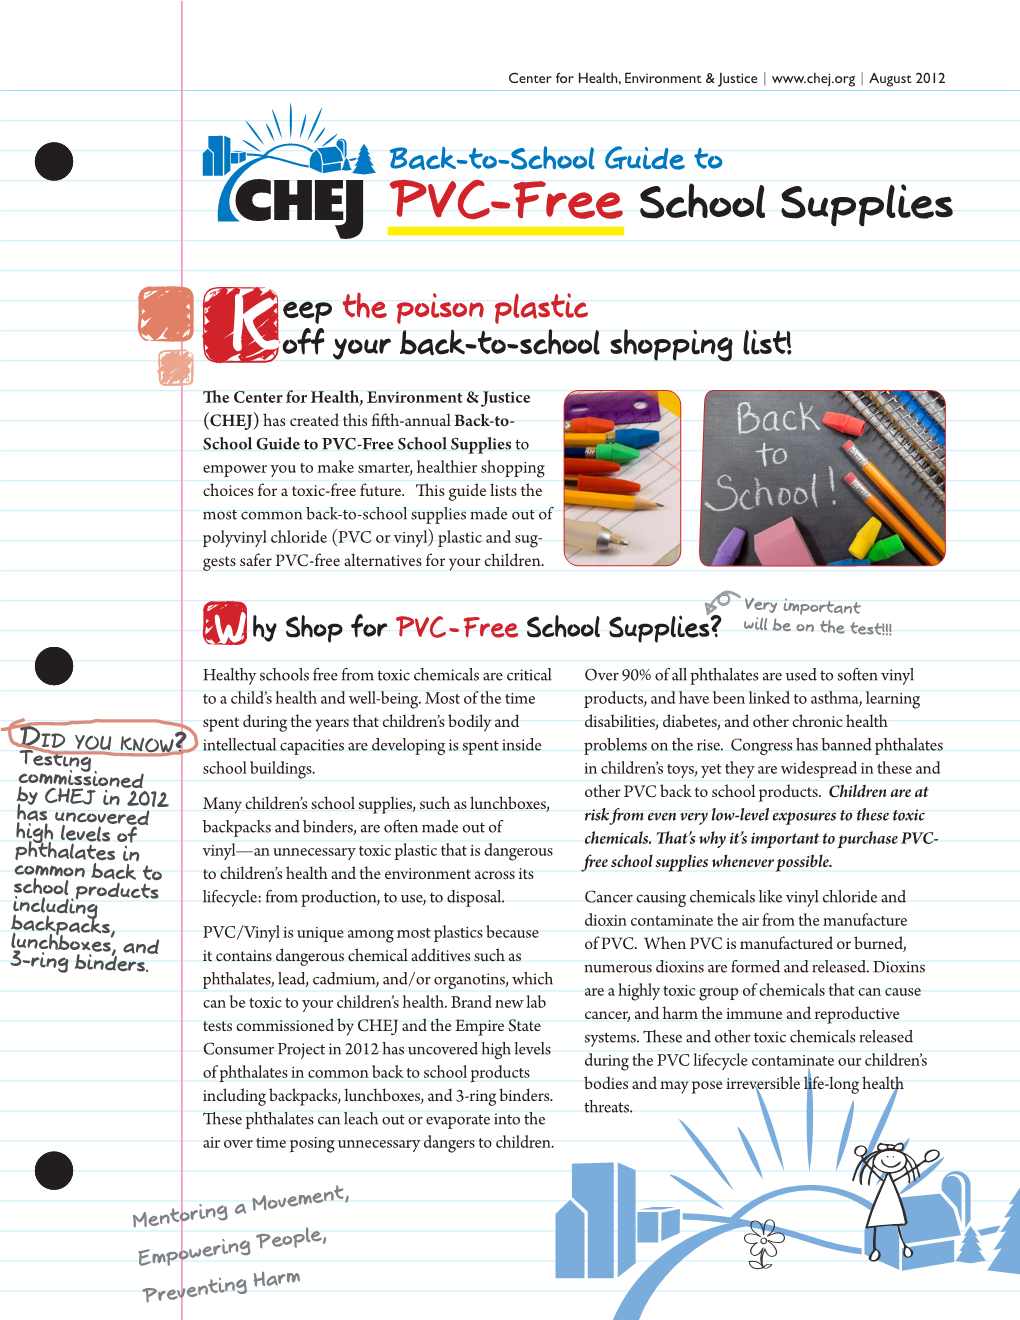 PVC-Free School Supplies W